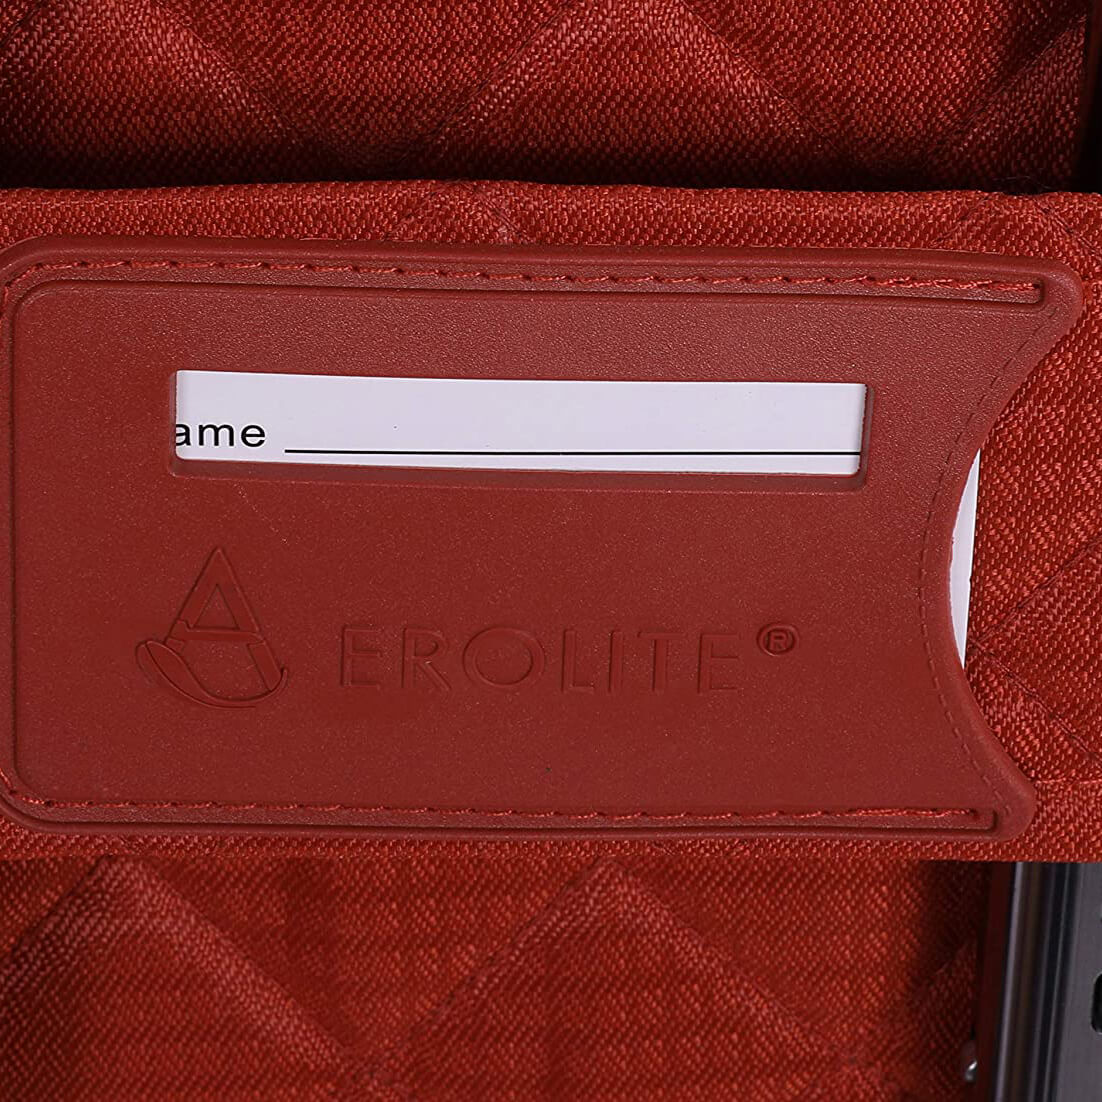 Aerolite easyJet Carry On Under Seat Cabin Luggage Trolley Bag Suitcas –  USB International Ltd